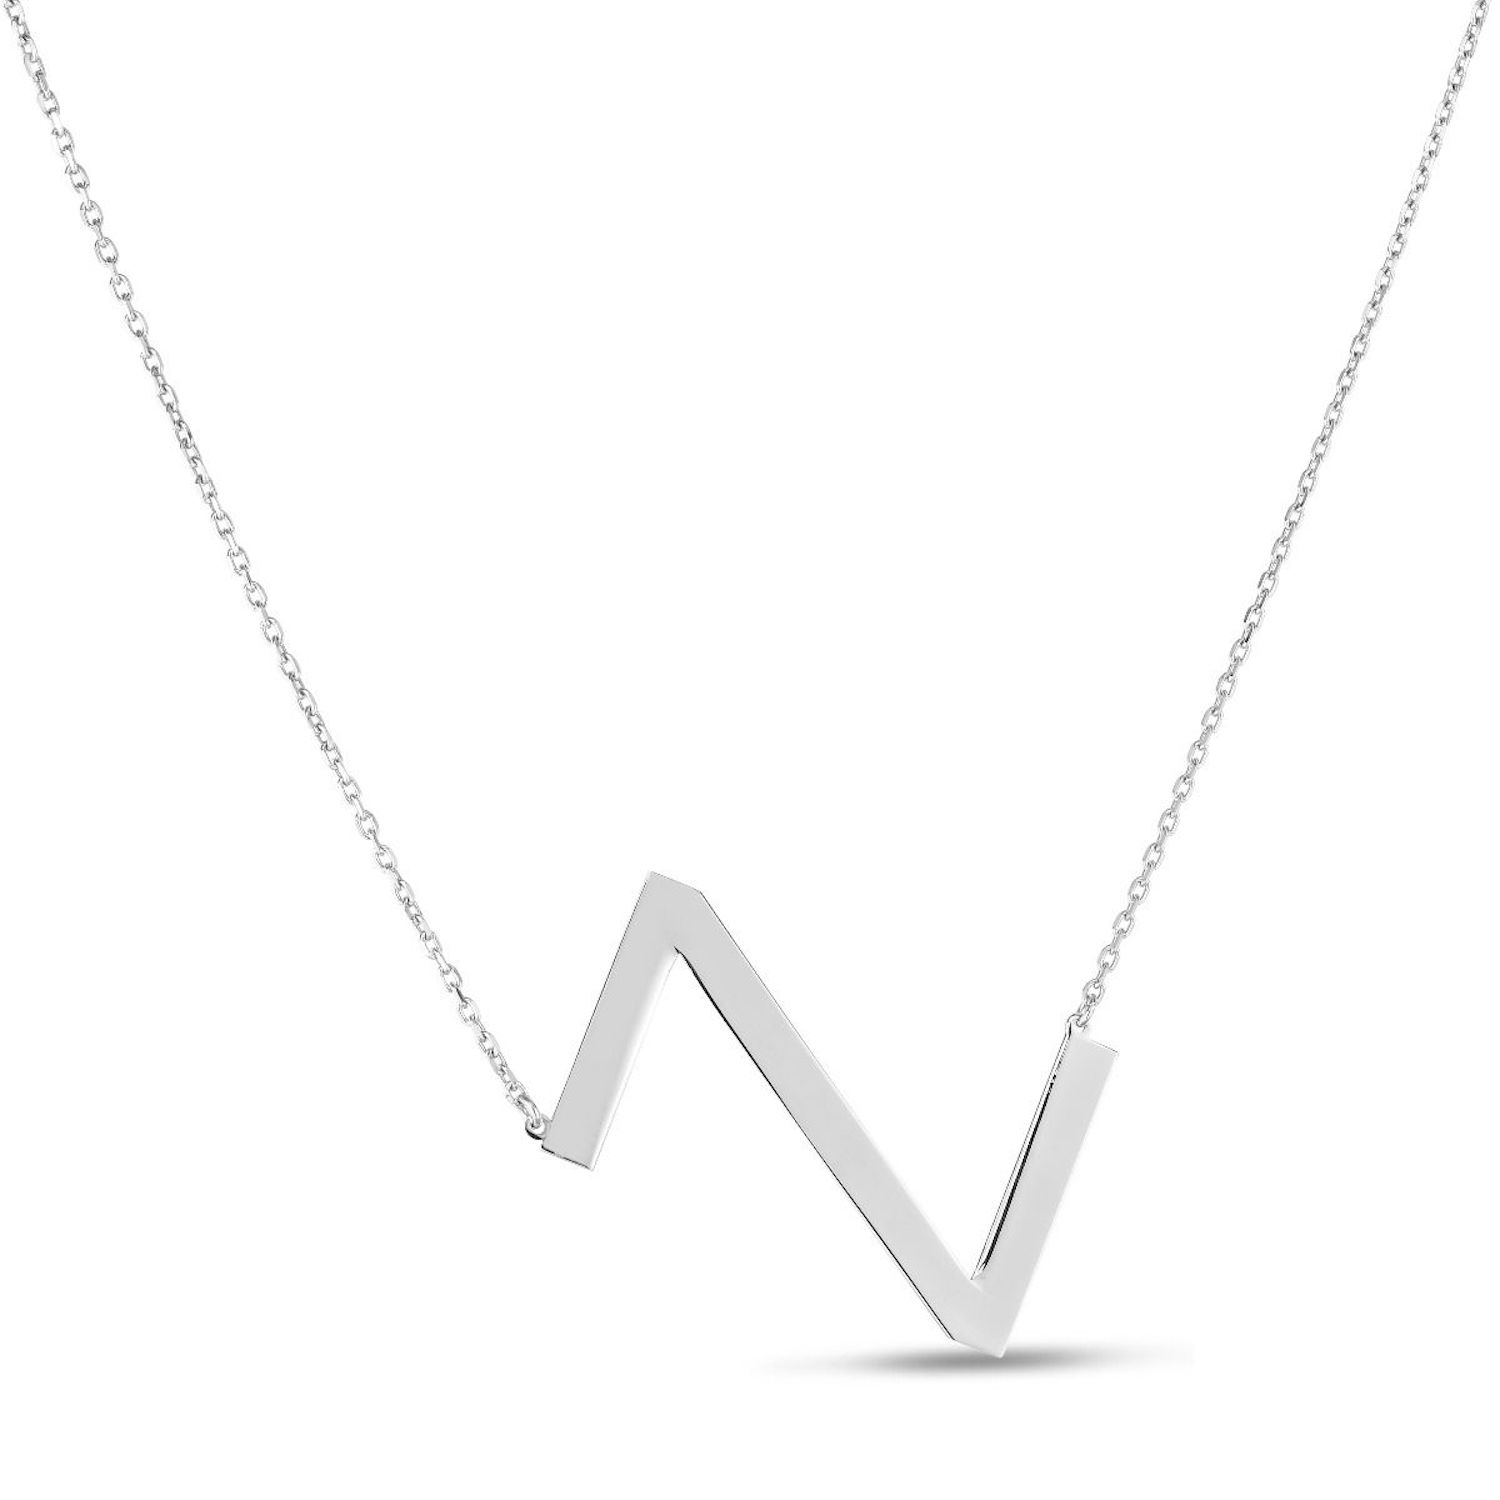 Sterling Silver Sideways Initials Letter Pendant Necklace 16"-18" Adj. 1.5" - Z